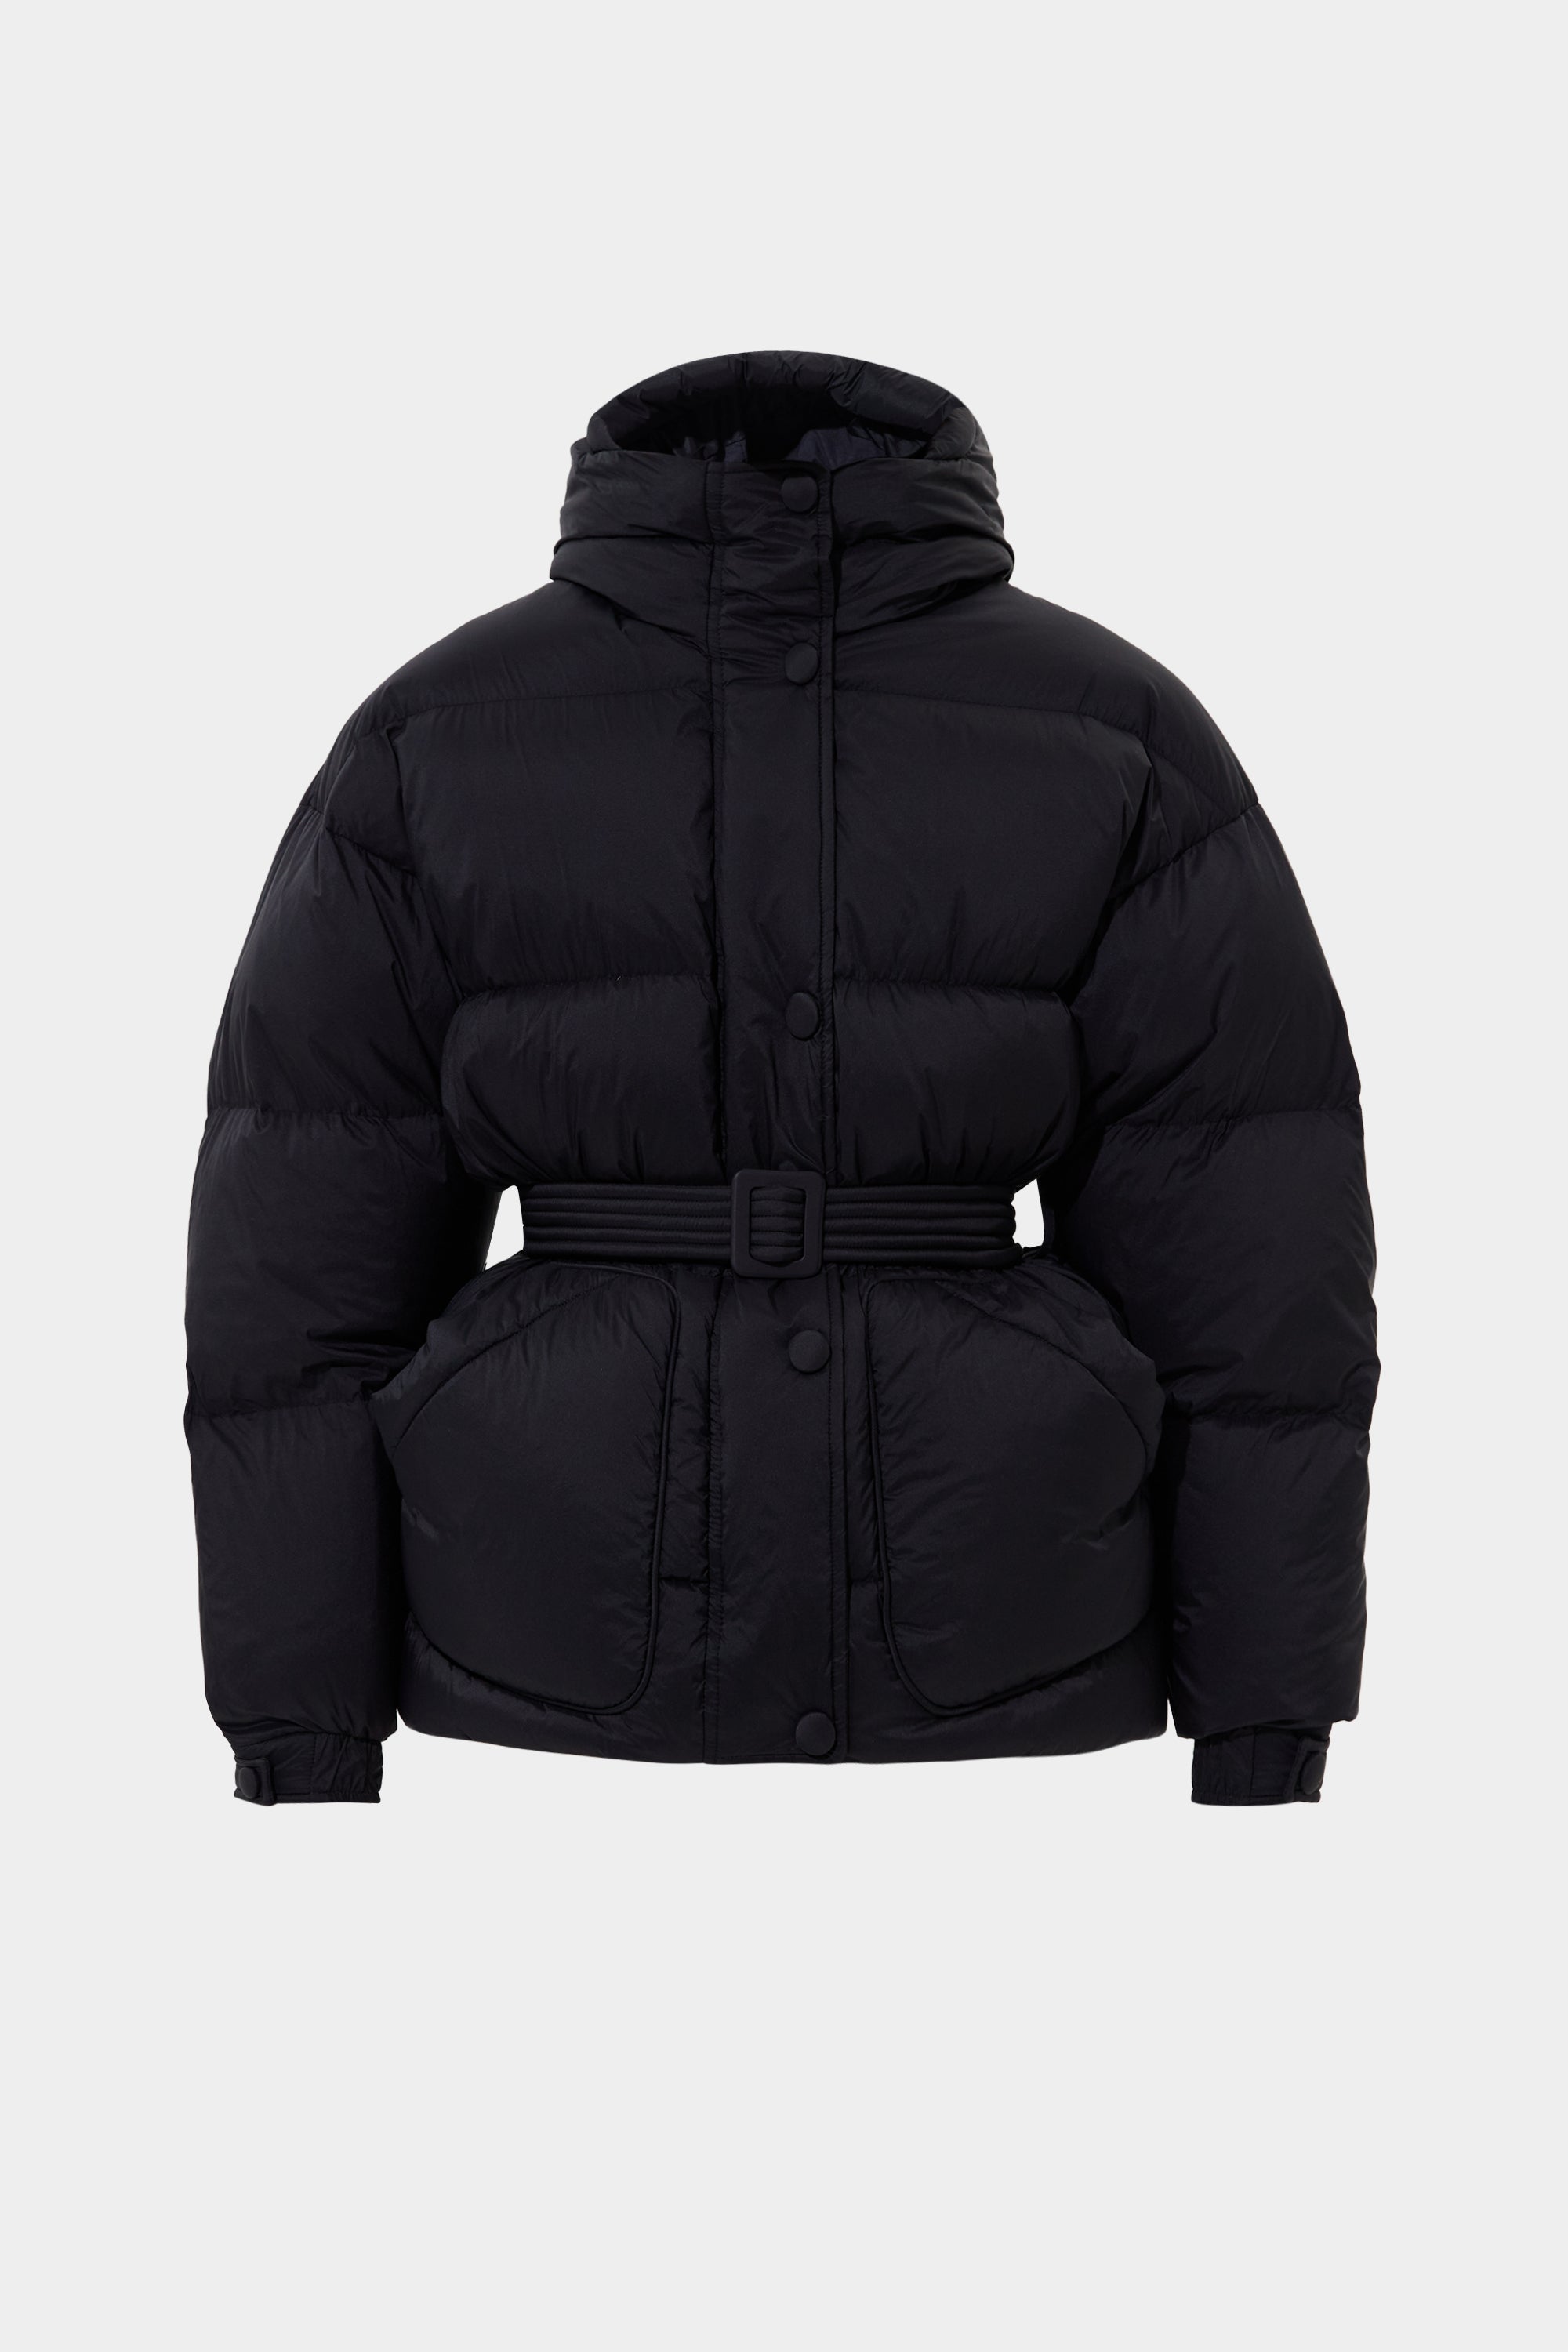 Michlin Jacket Soft Black